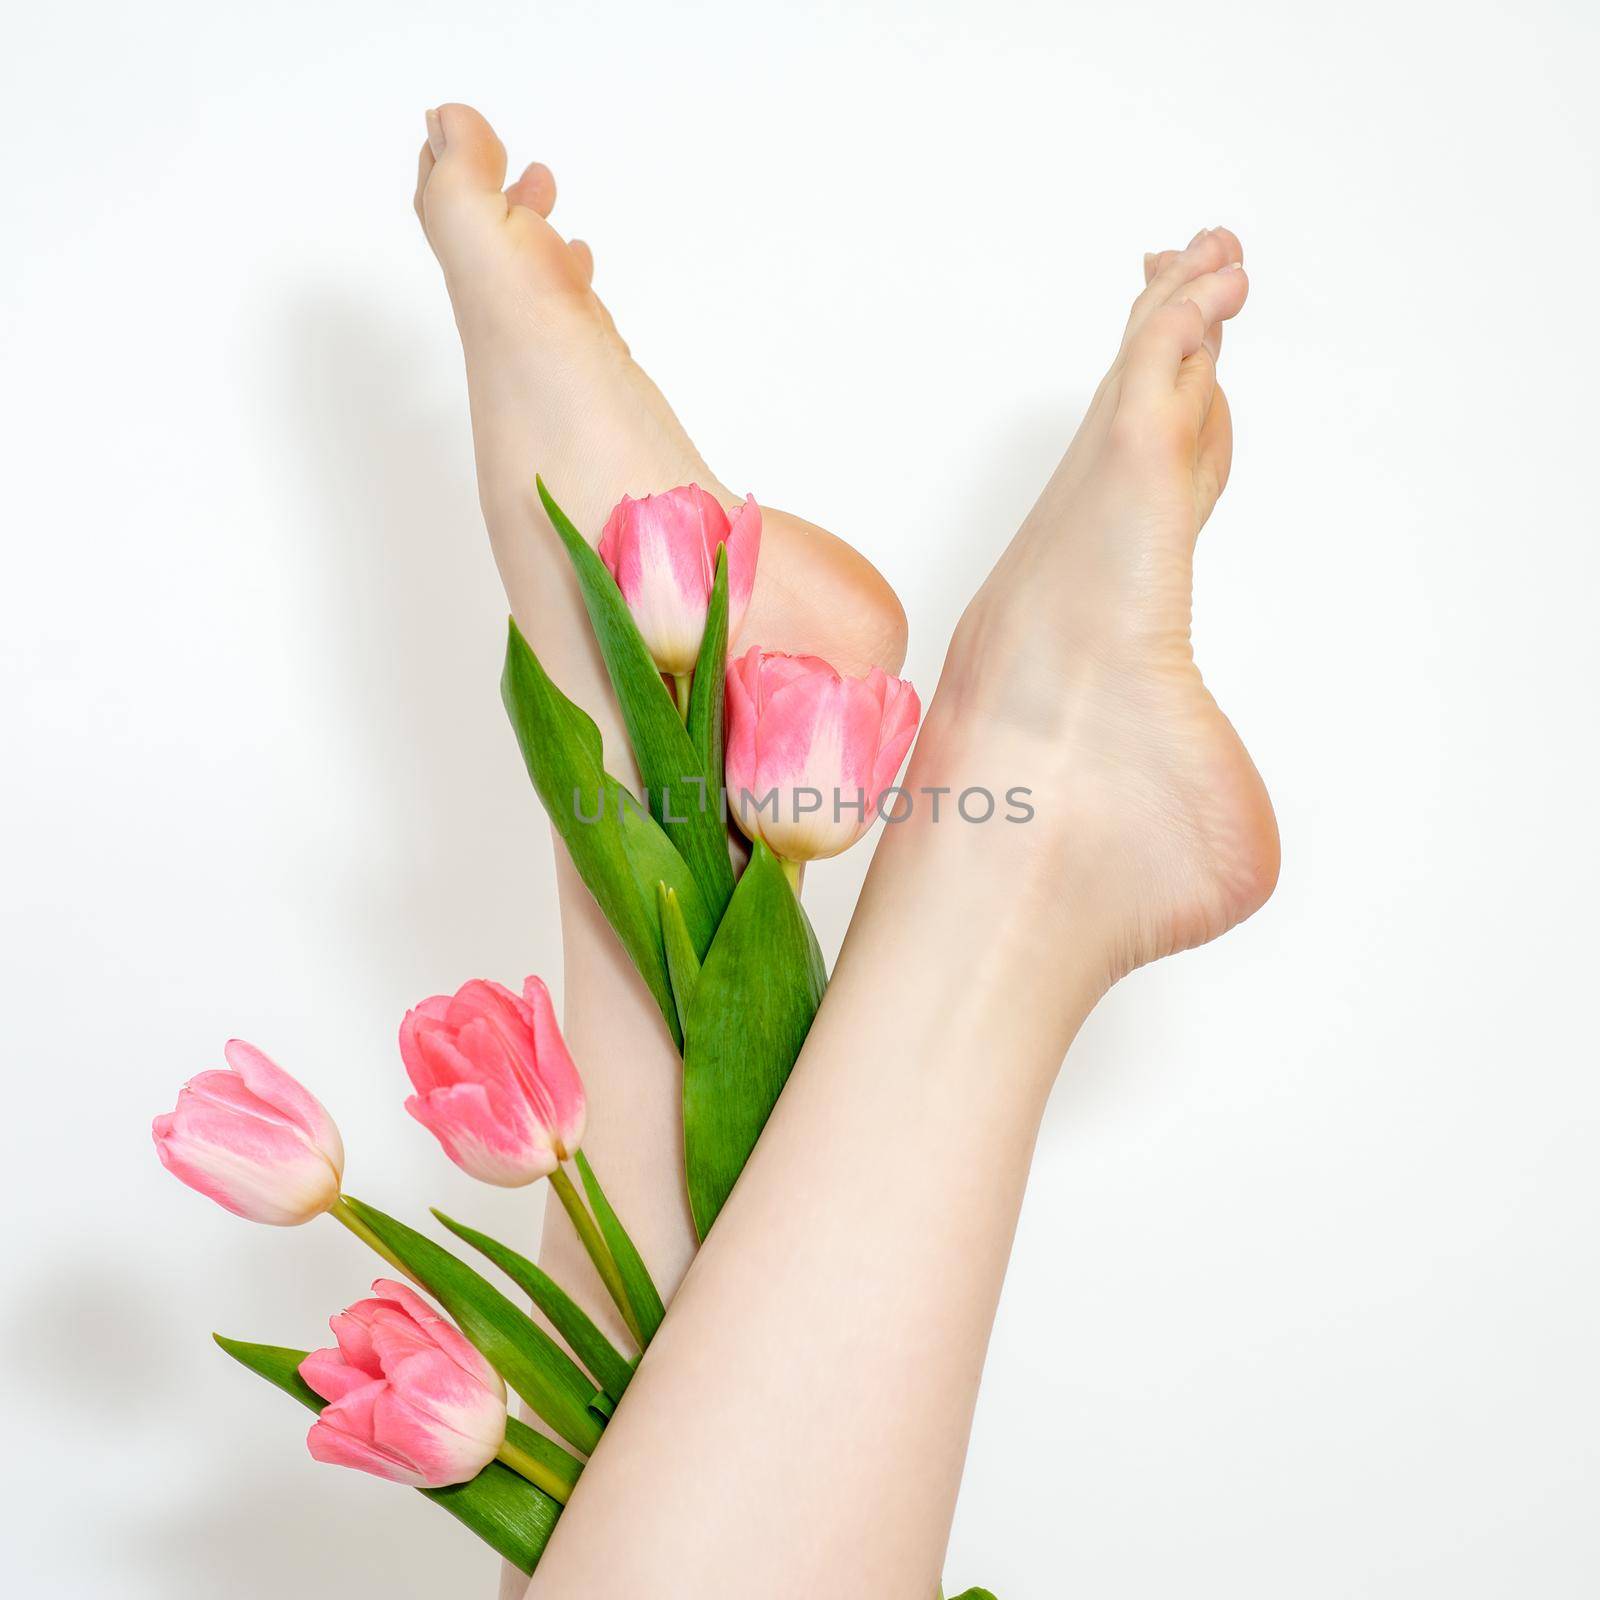 Woman's legs with tulips flowers by okskukuruza